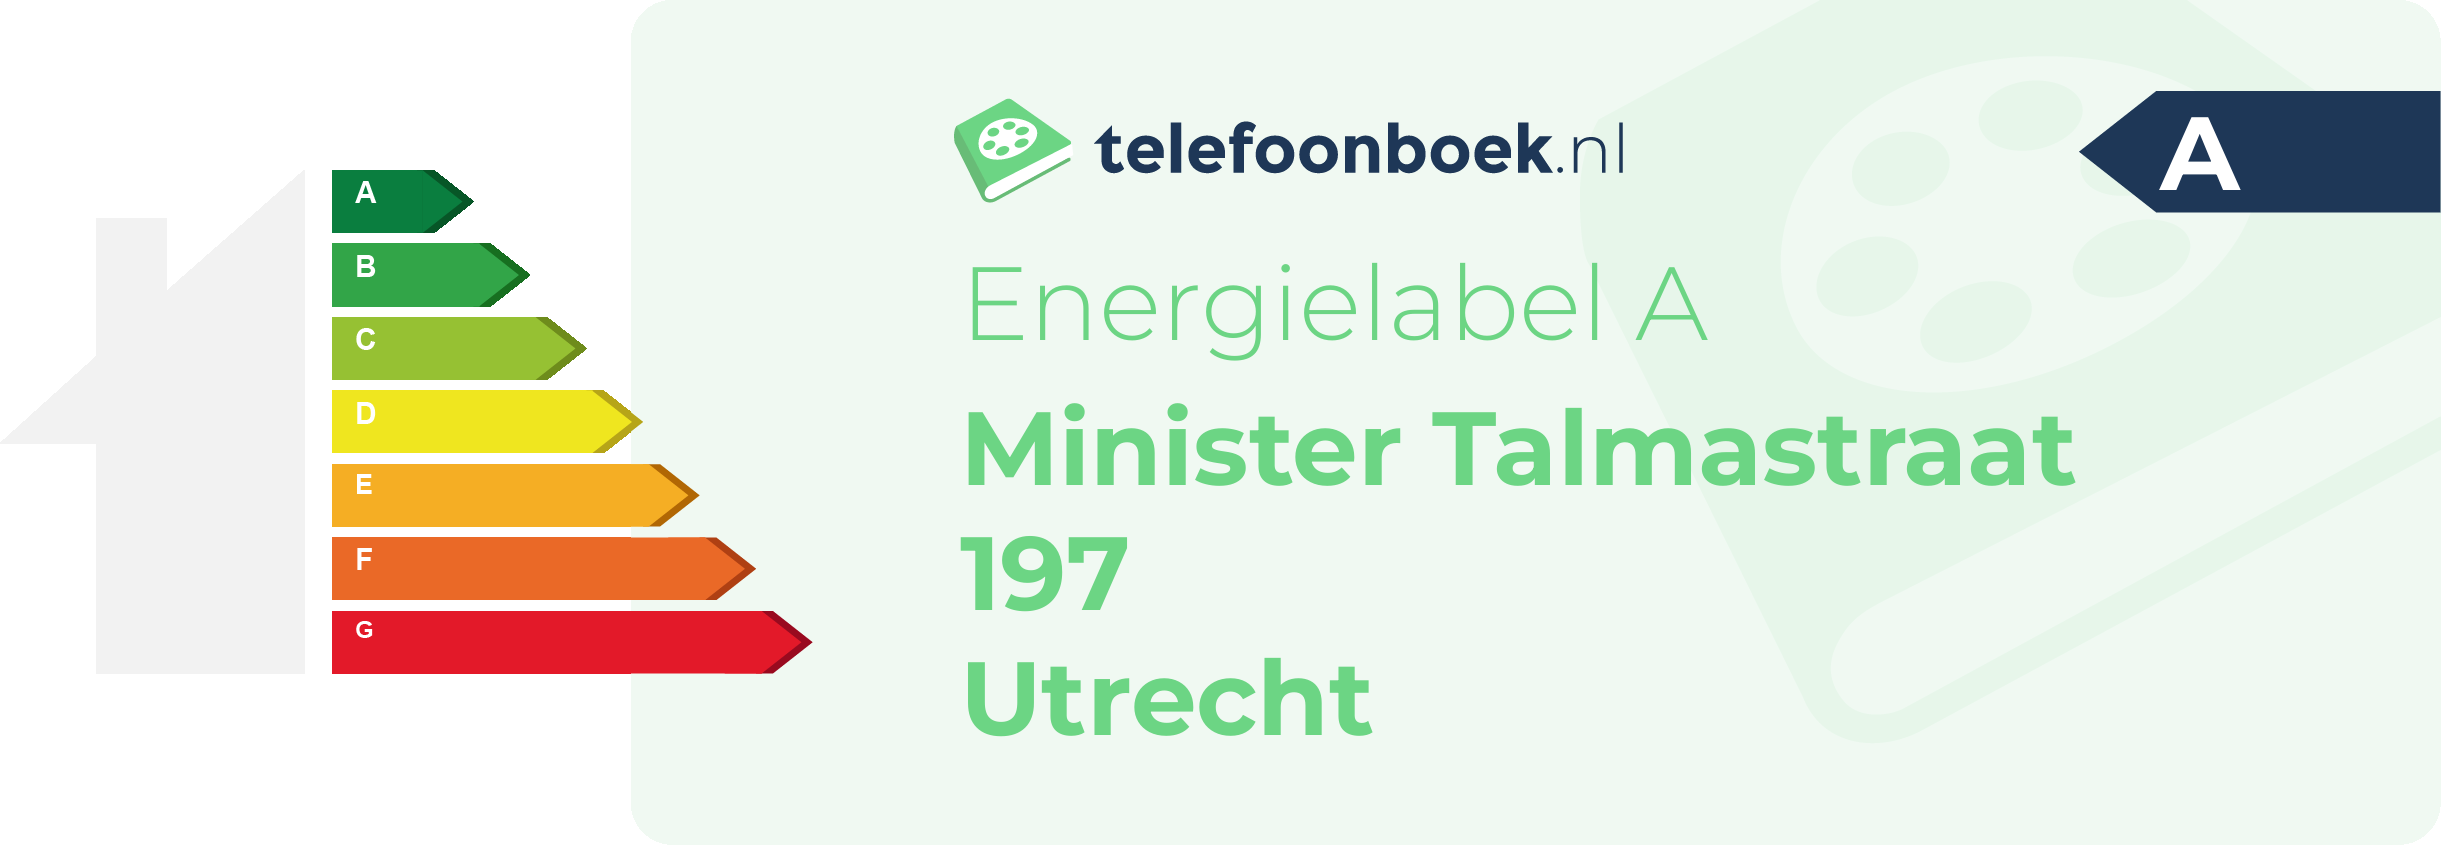 Energielabel Minister Talmastraat 197 Utrecht